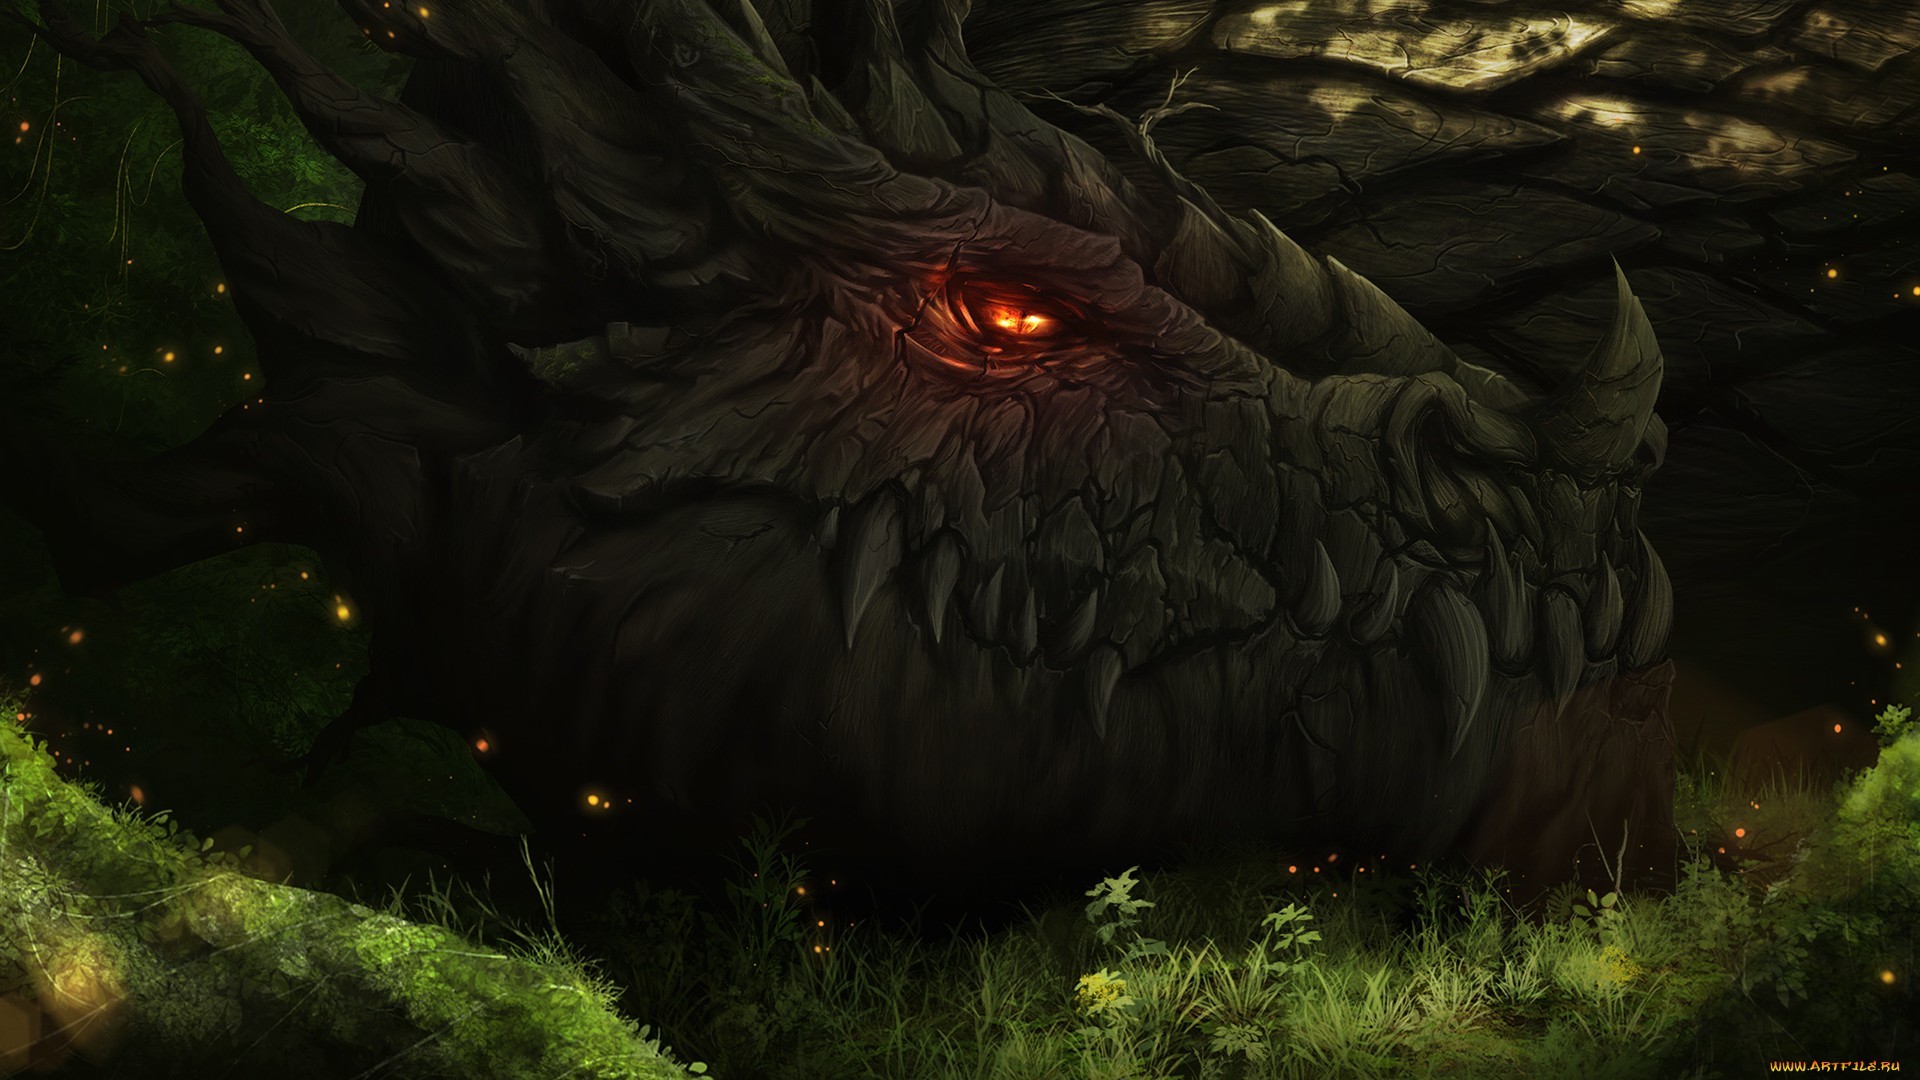 General 1920x1080 dragon forest artwork fantasy art creature red eyes glowing eyes